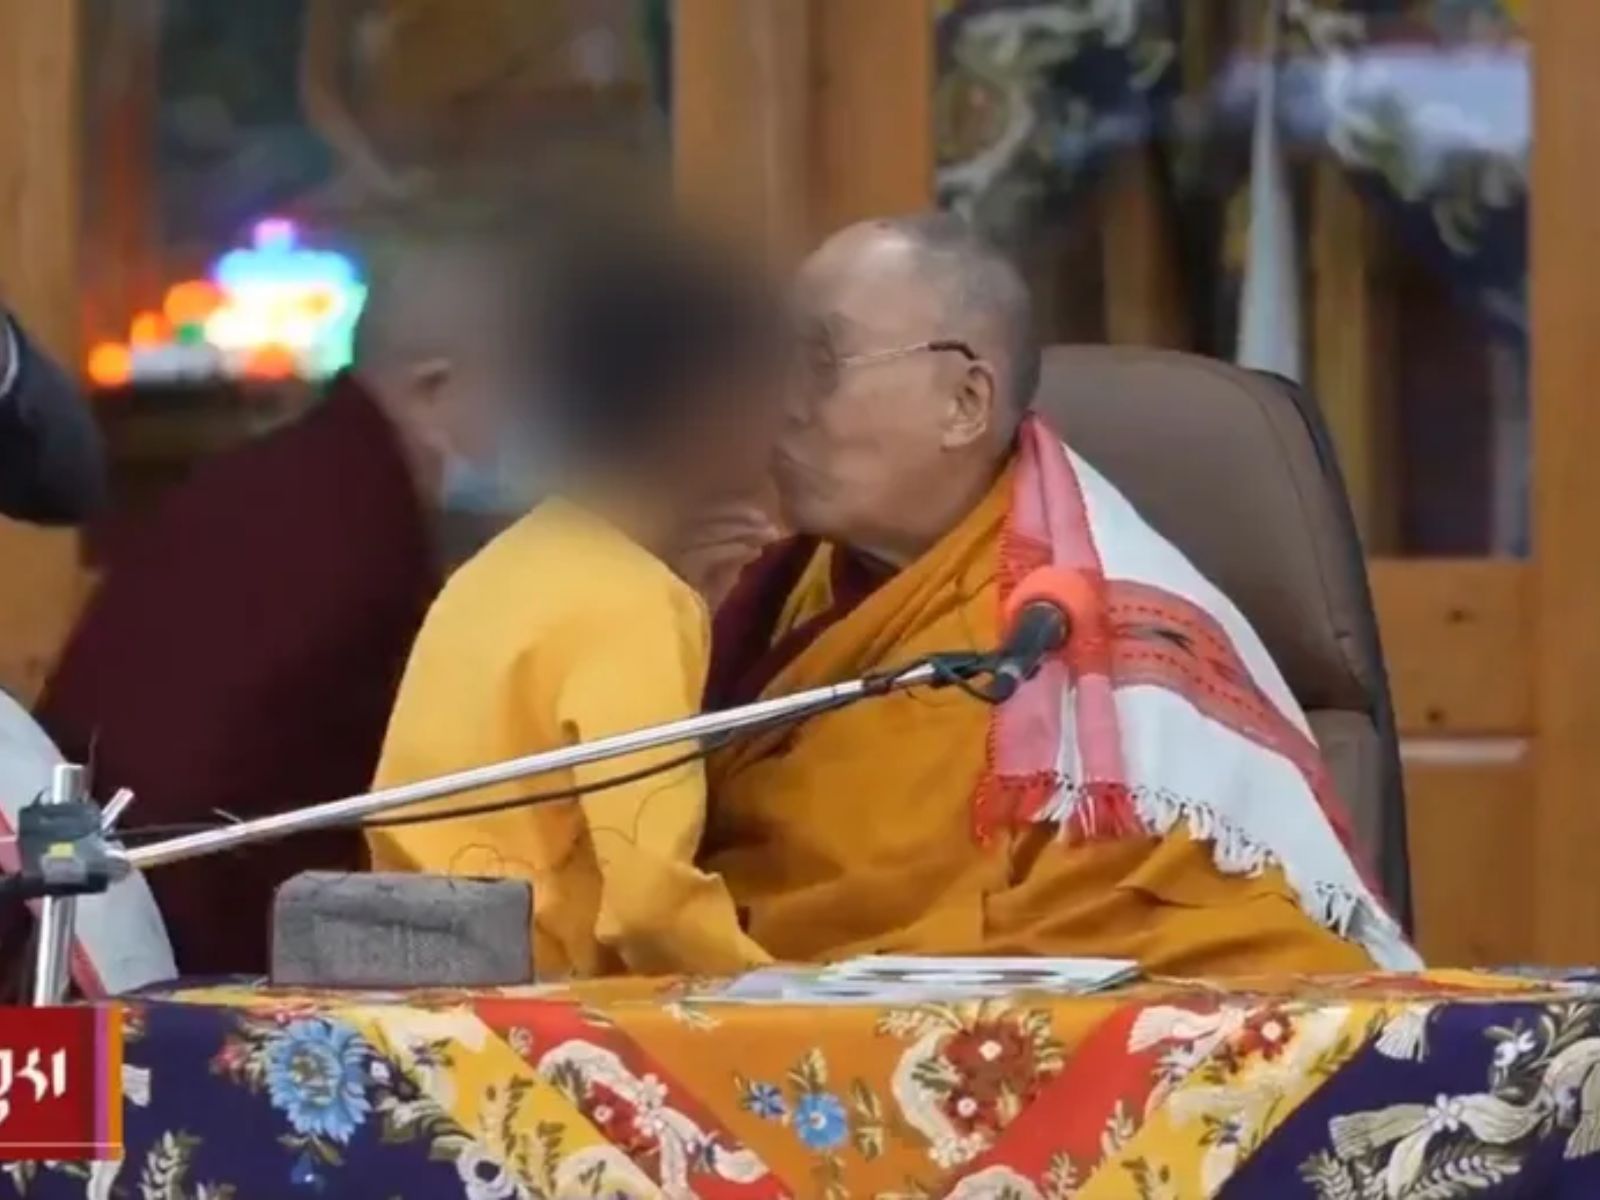 Dalai Lama se desculpa após beijar menino na boca e vídeo viralizar